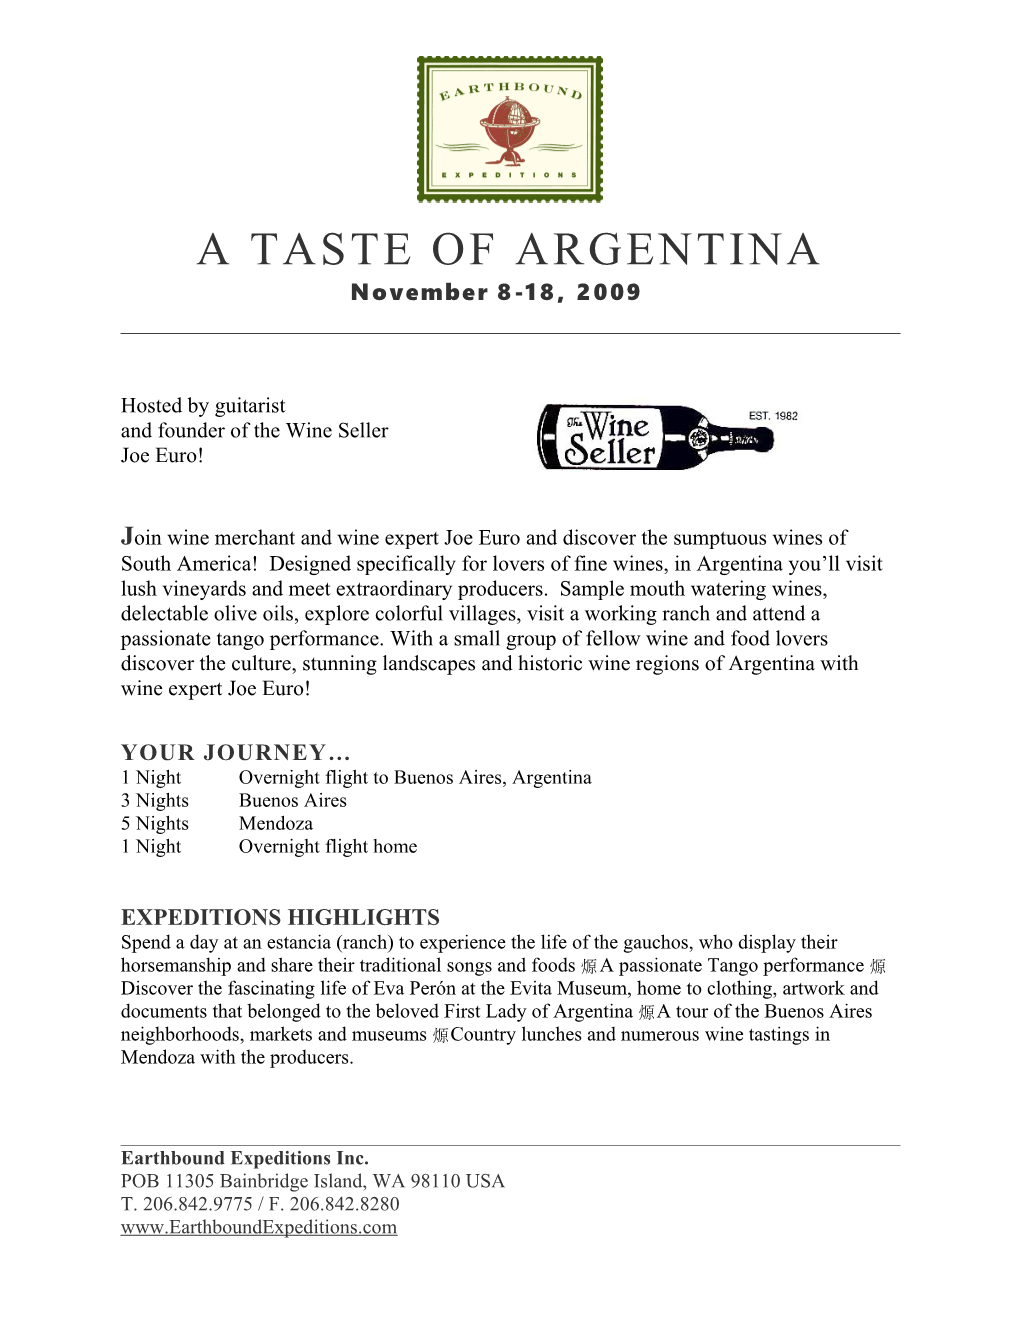 A Taste of Argentina